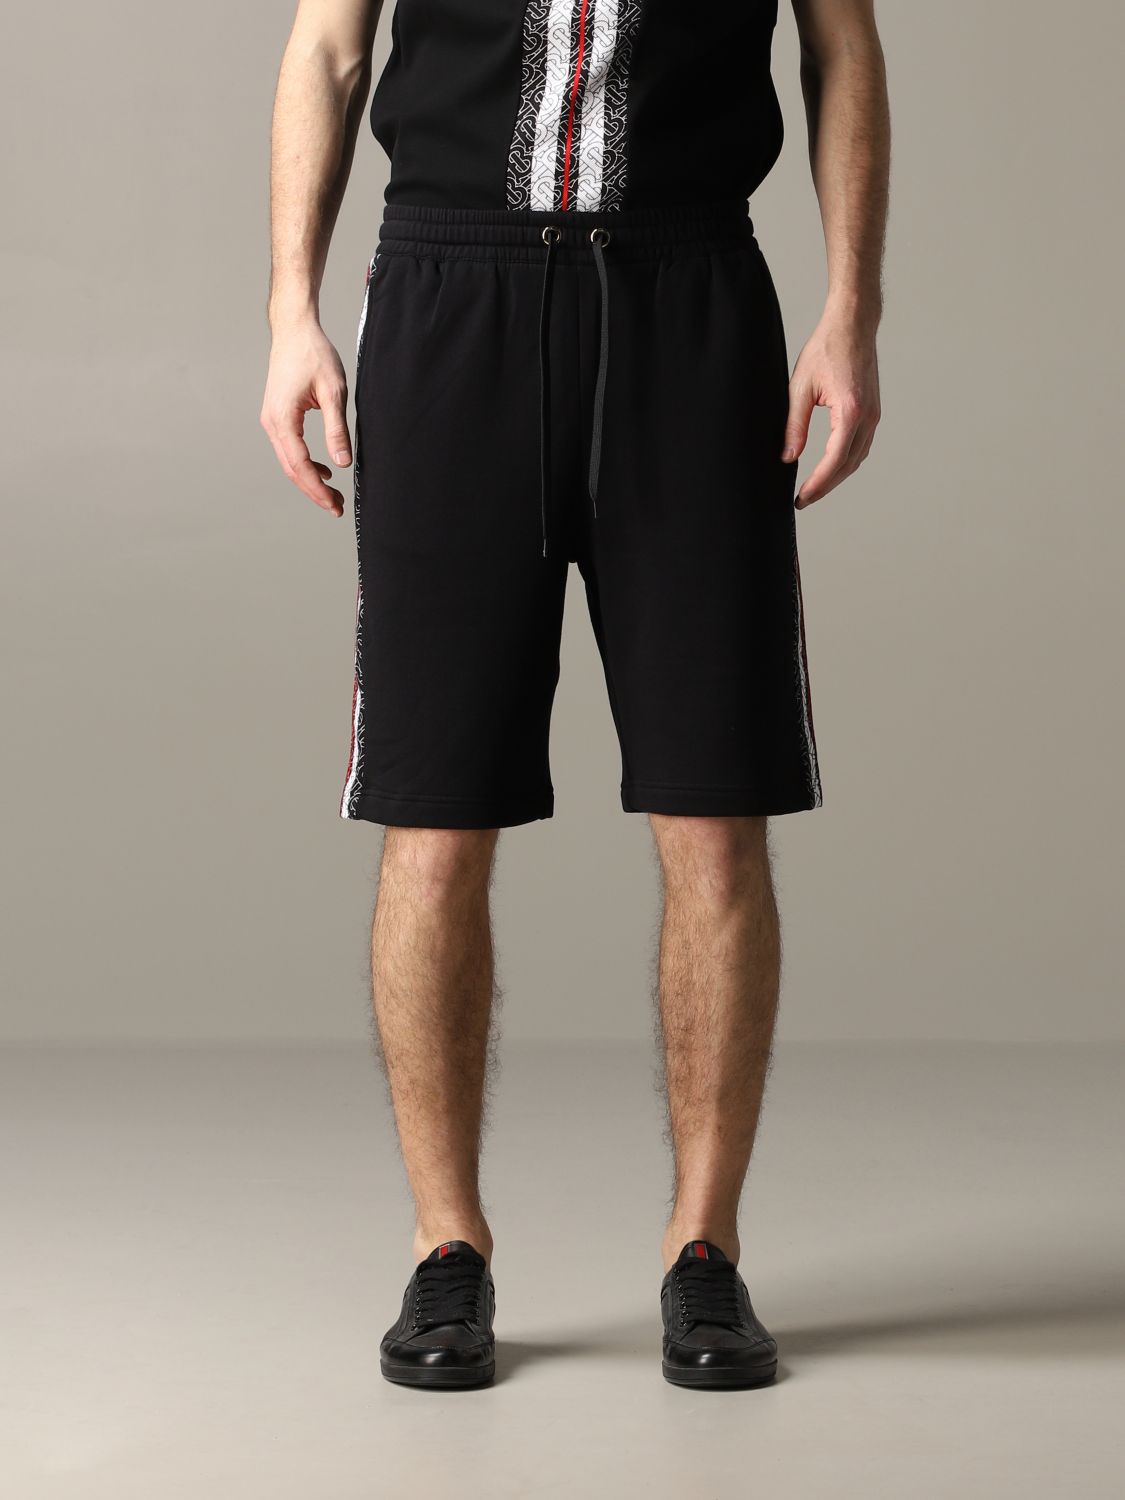 burberry men shorts